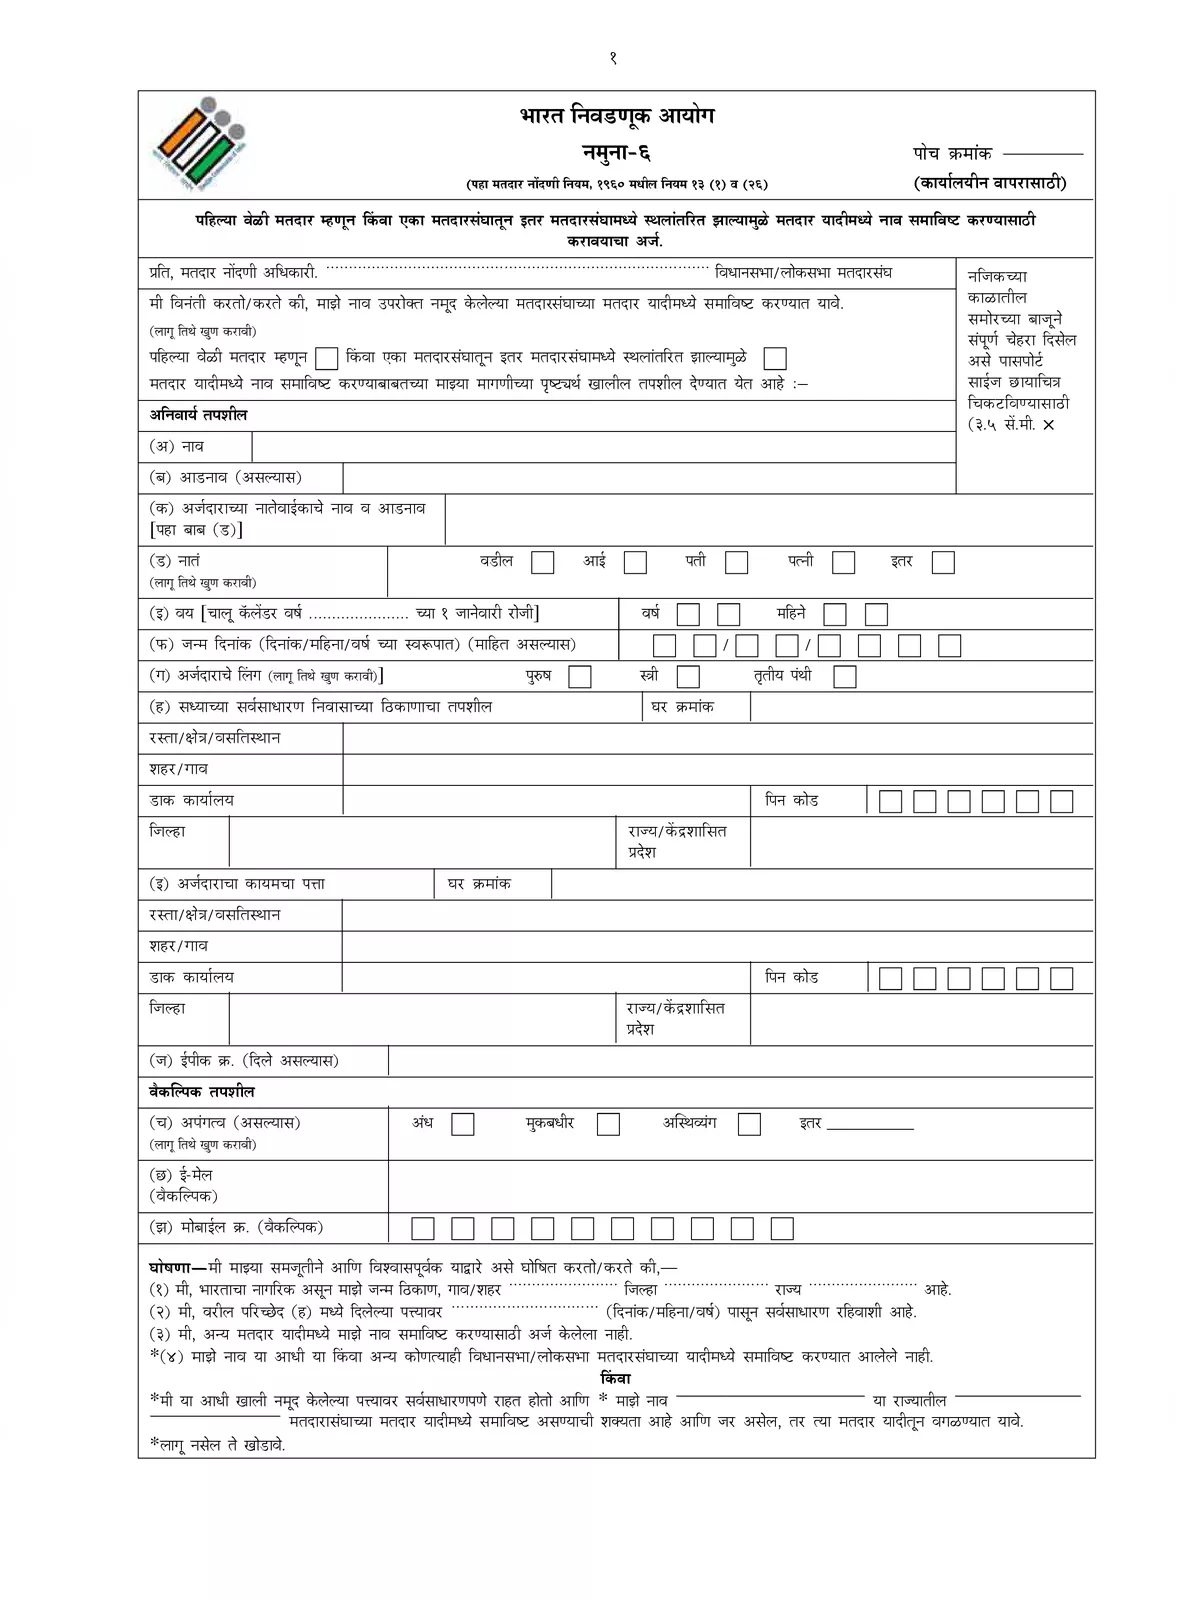 मतदार ओळखपत्र फॉर्म 6 – Election Voter ID Form 6